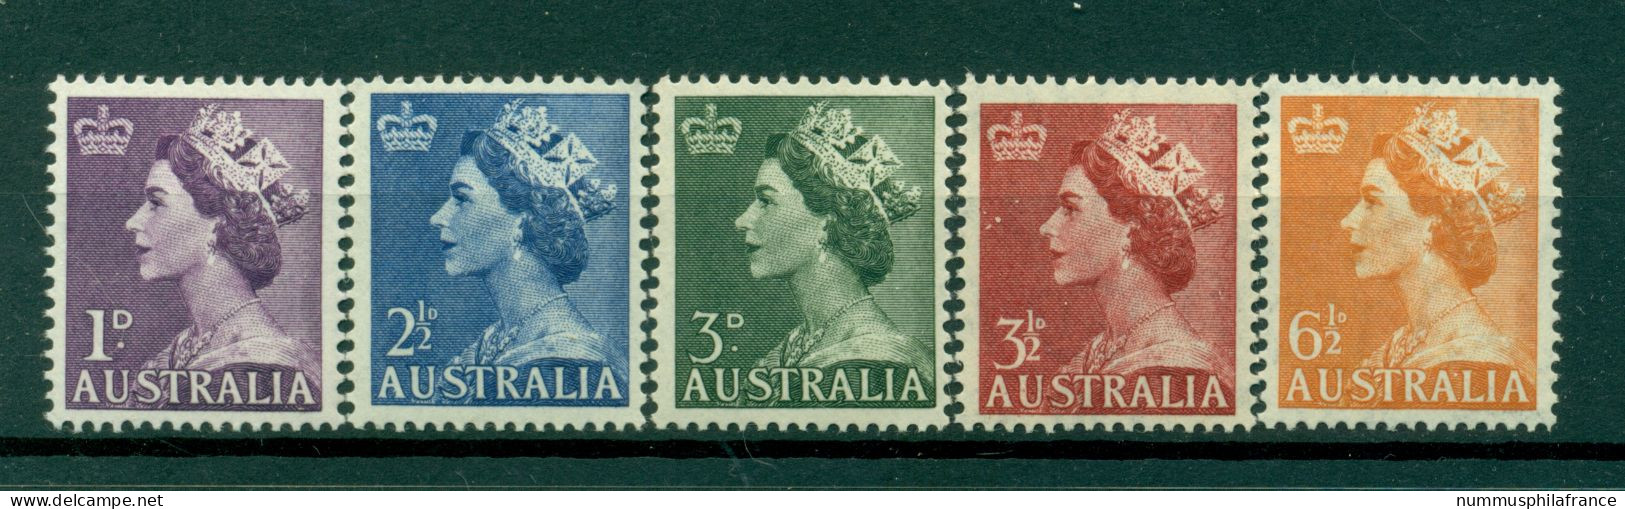 Australie 1953 - Y & T N. 196/98A - Série Courante (Michel N. 229/30-234/36) - Neufs